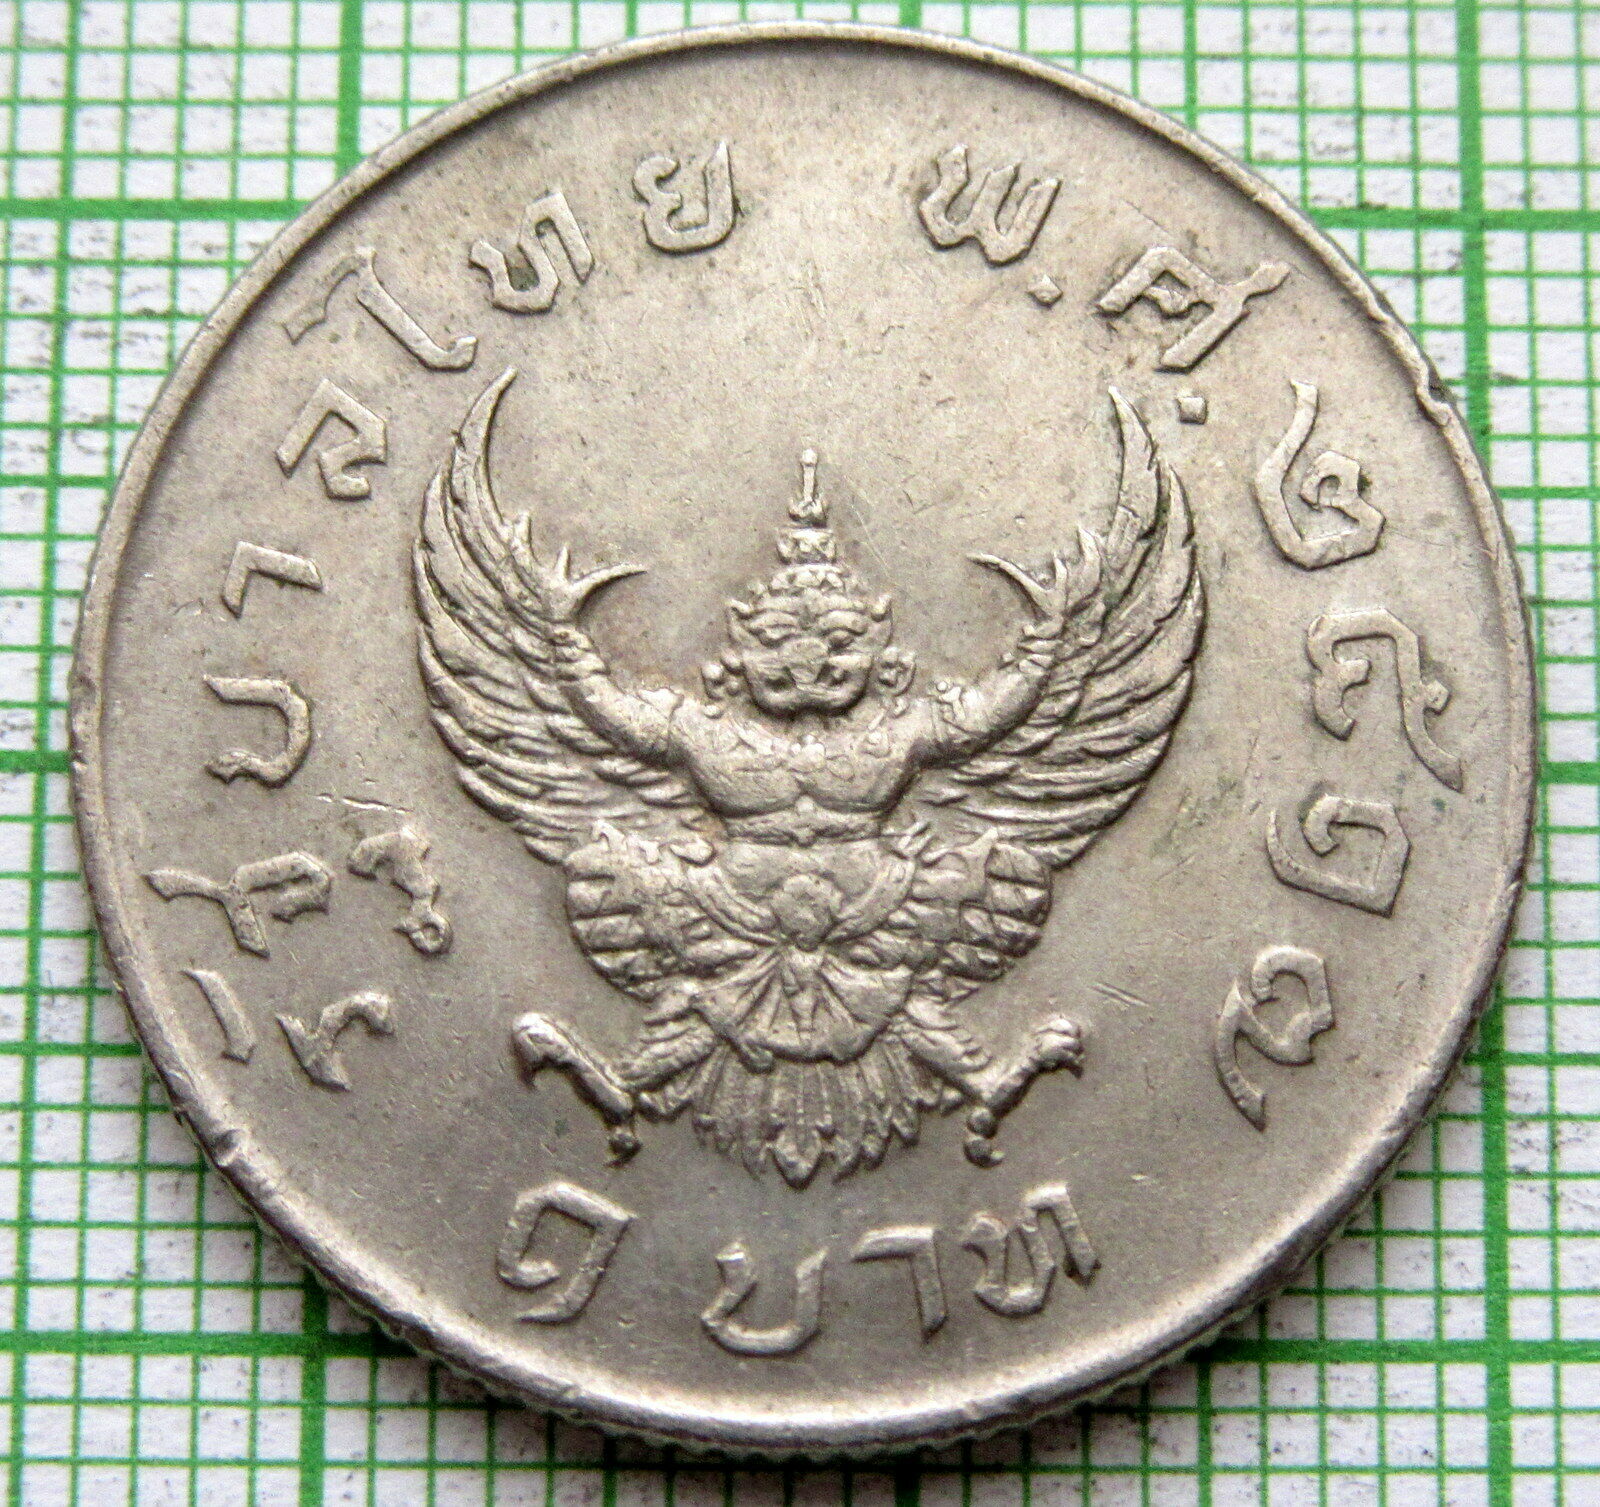 Thailand Rama Ix 2517 - 1974 1 Baht, Garuda